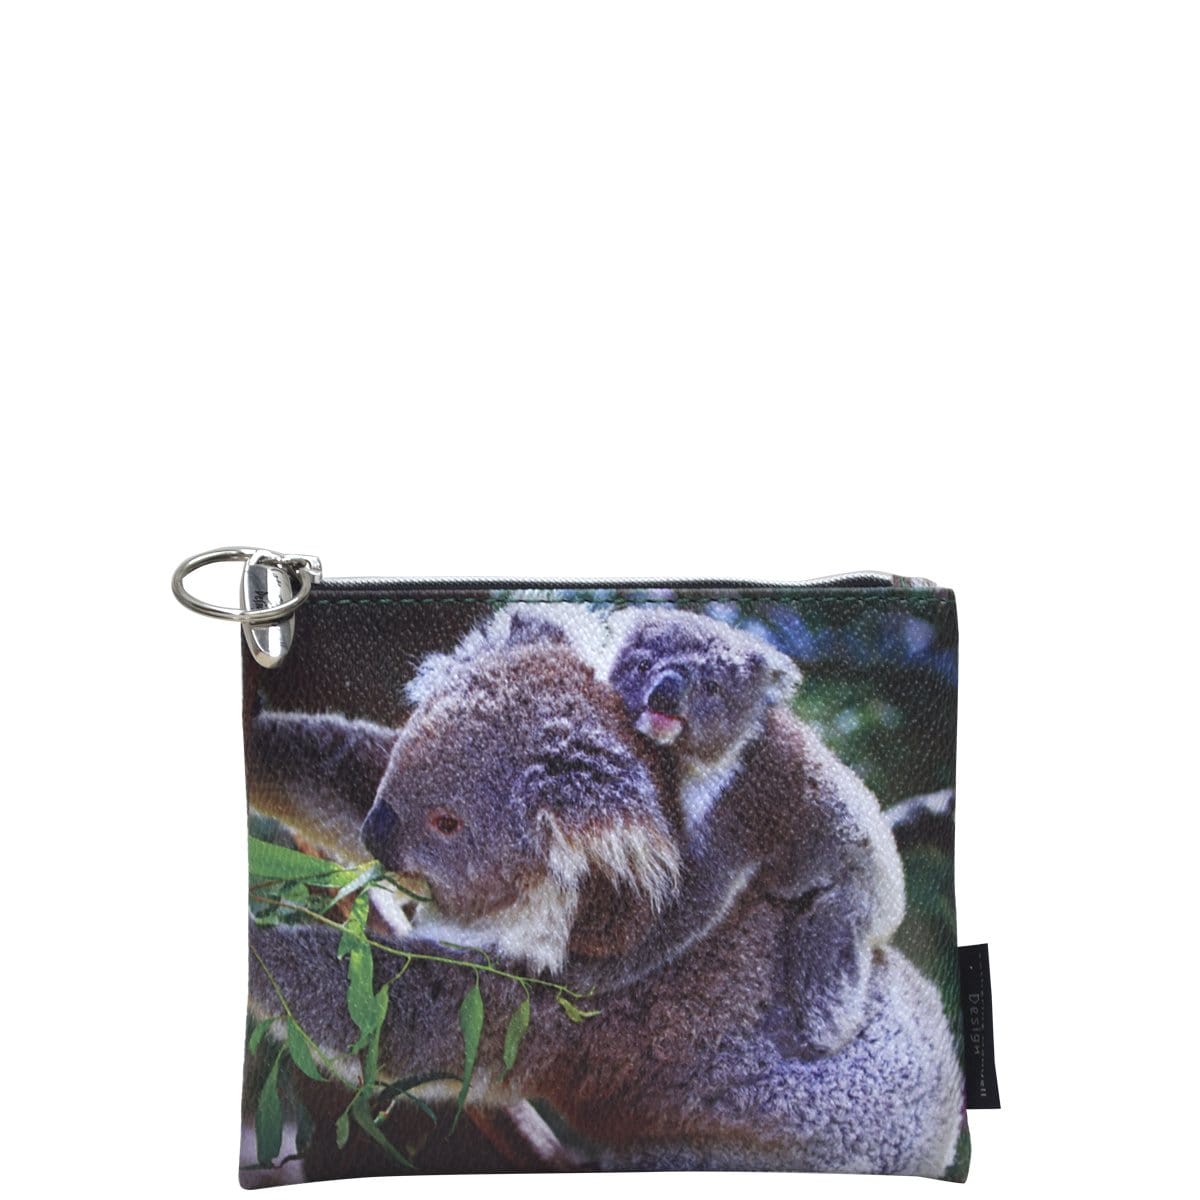 Everyday Purse - Koala -On Sale